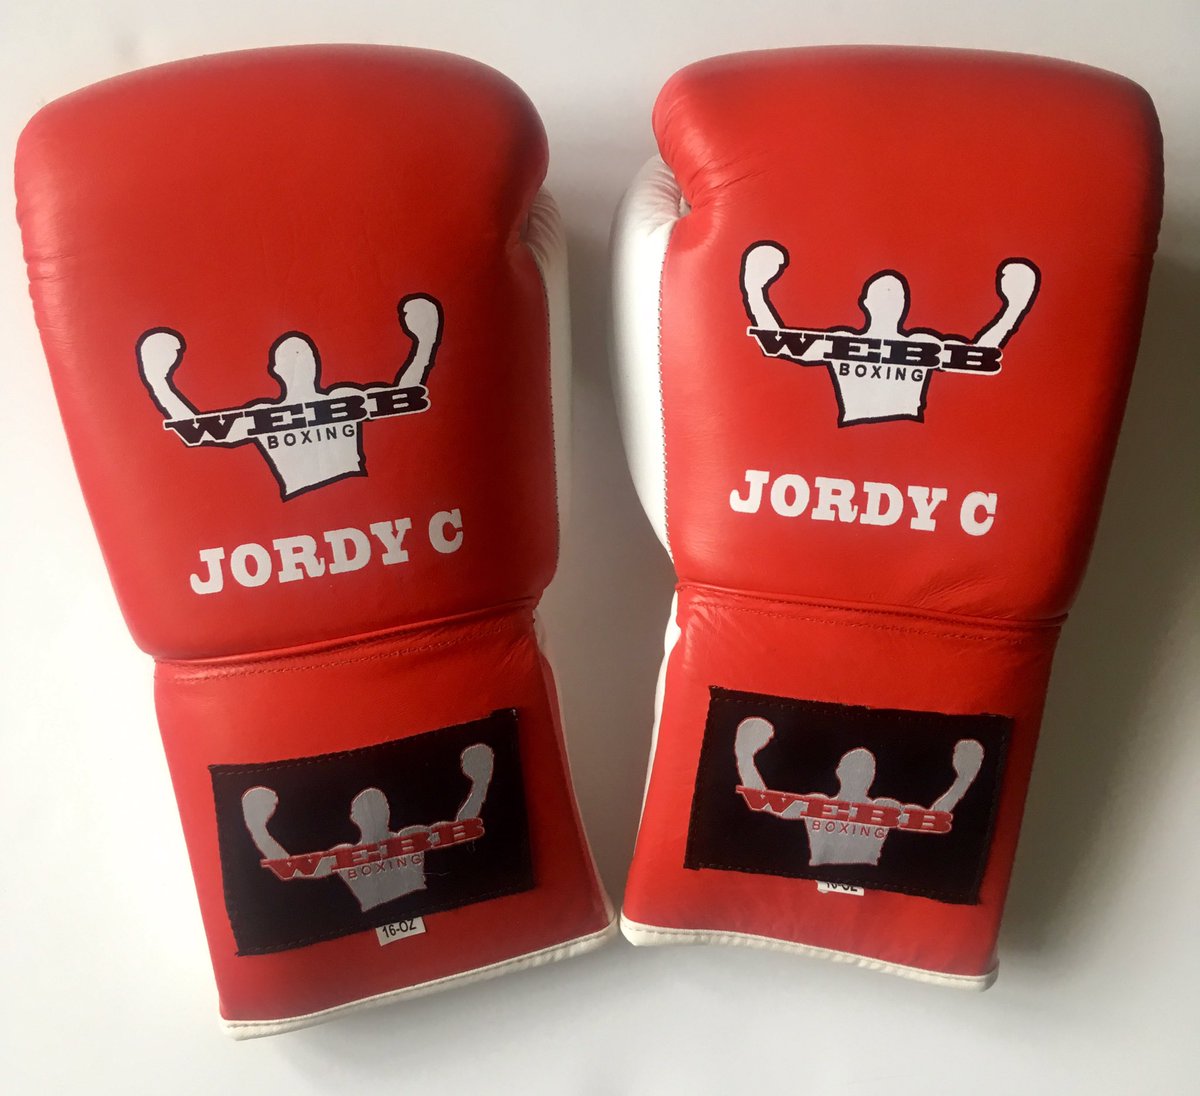 New tools sent out to @jordyclayt . #boxingequipmentstore #proboxingequipment #sparringgloves